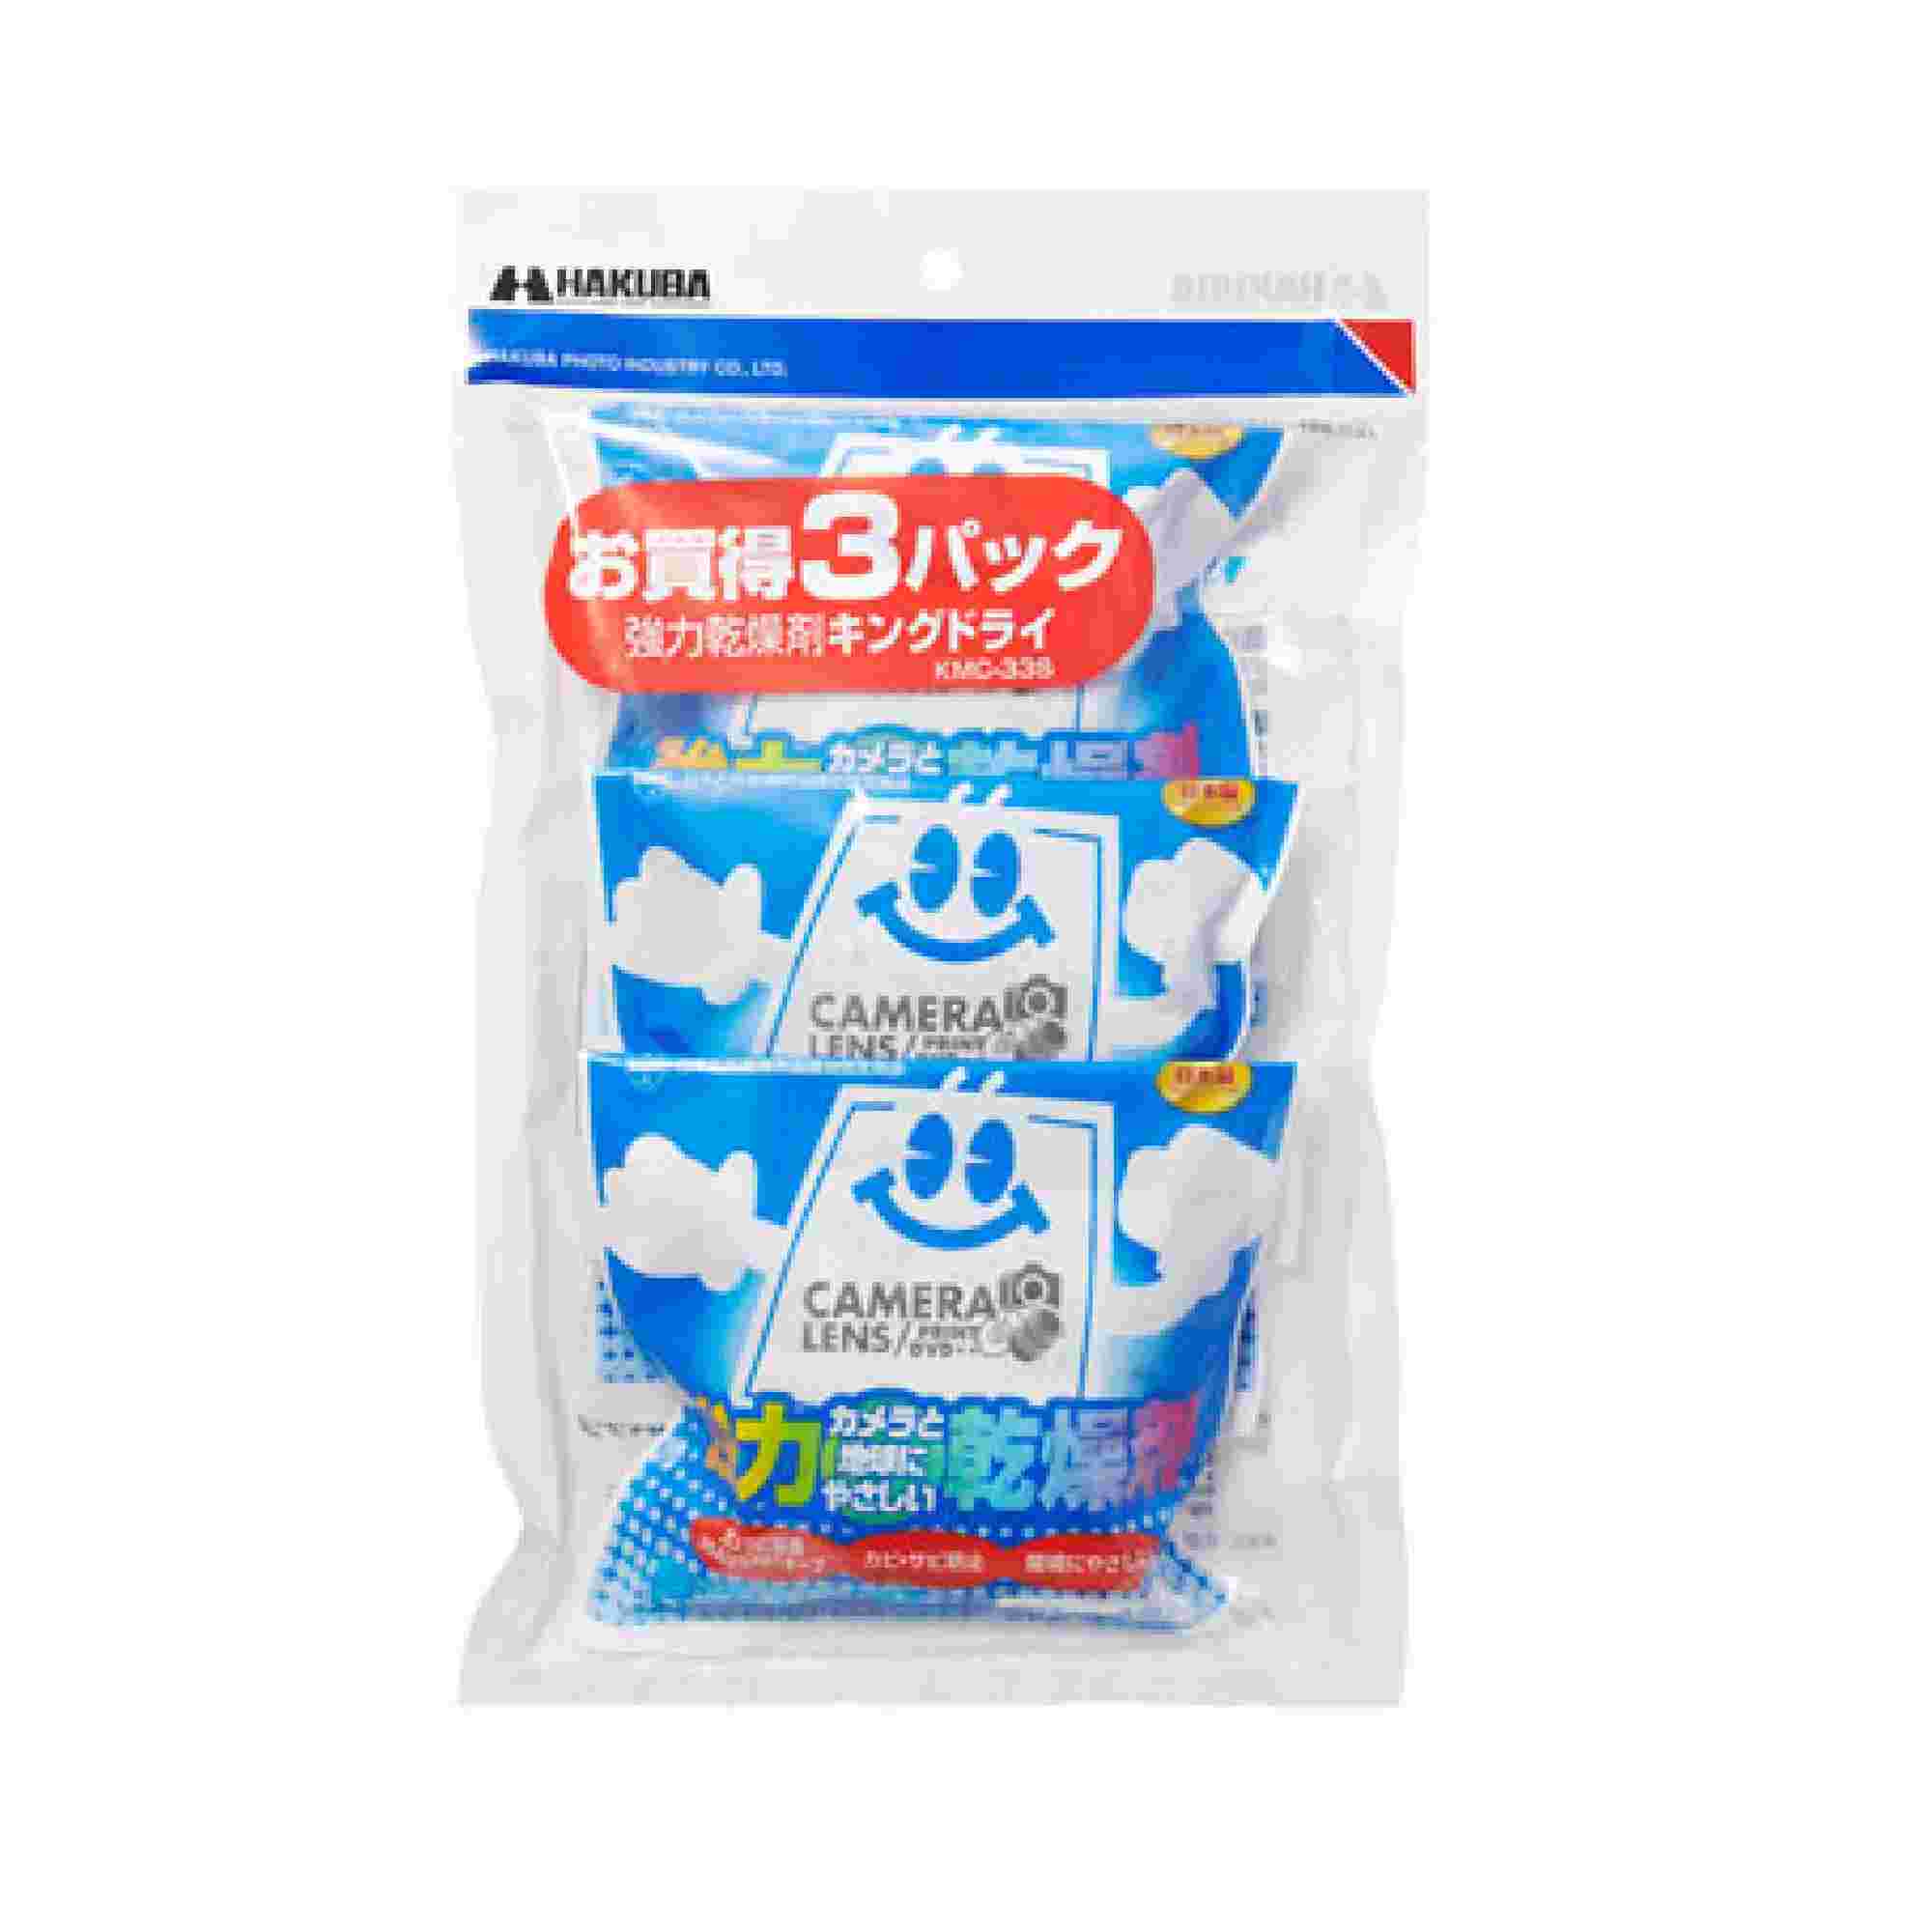 Hakuba 強力乾燥劑 12片裝 (30G) 清潔用品